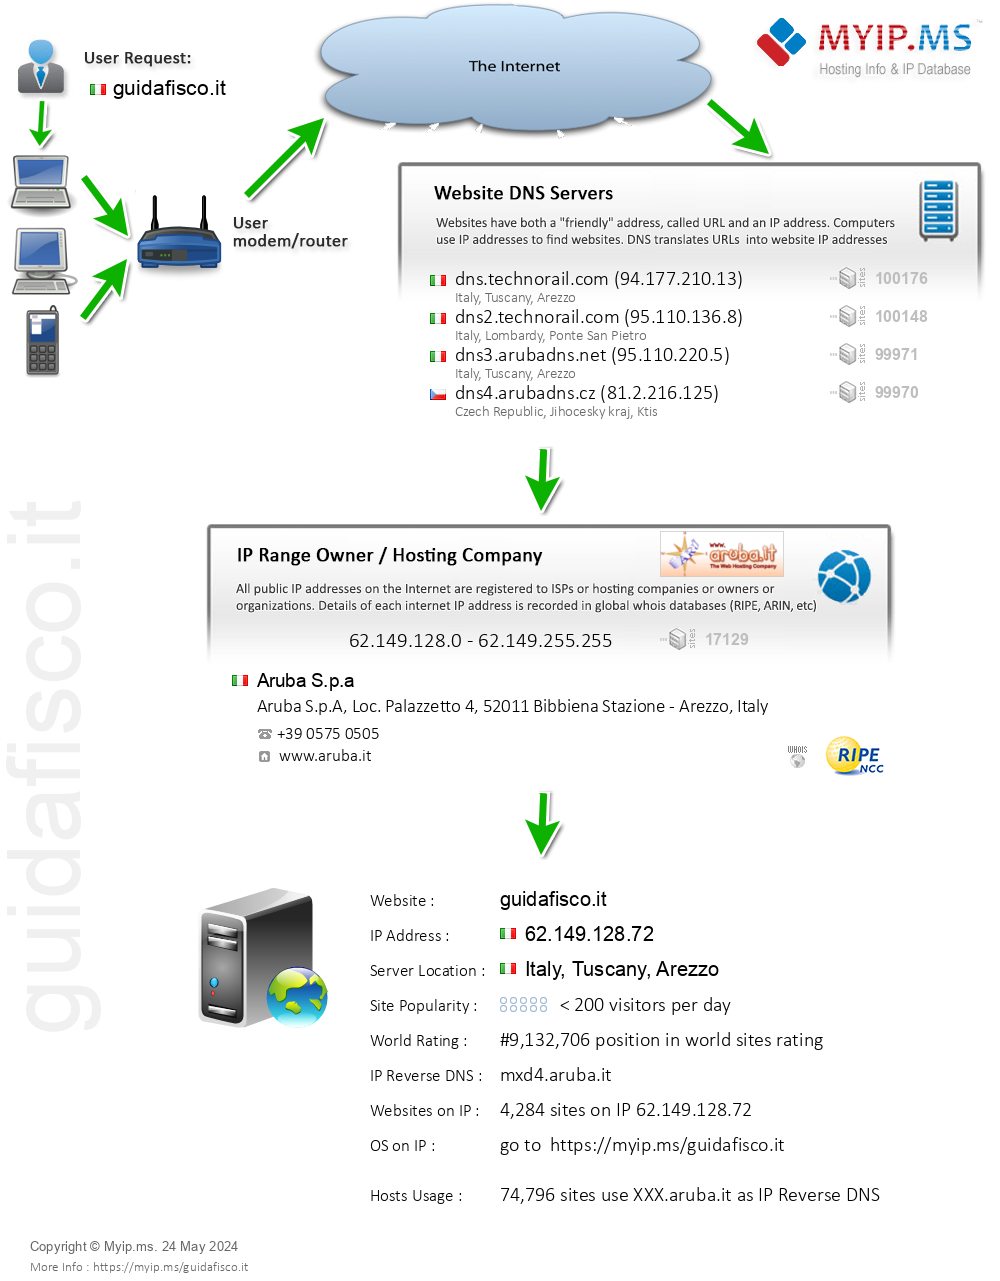 Guidafisco.it - Website Hosting Visual IP Diagram